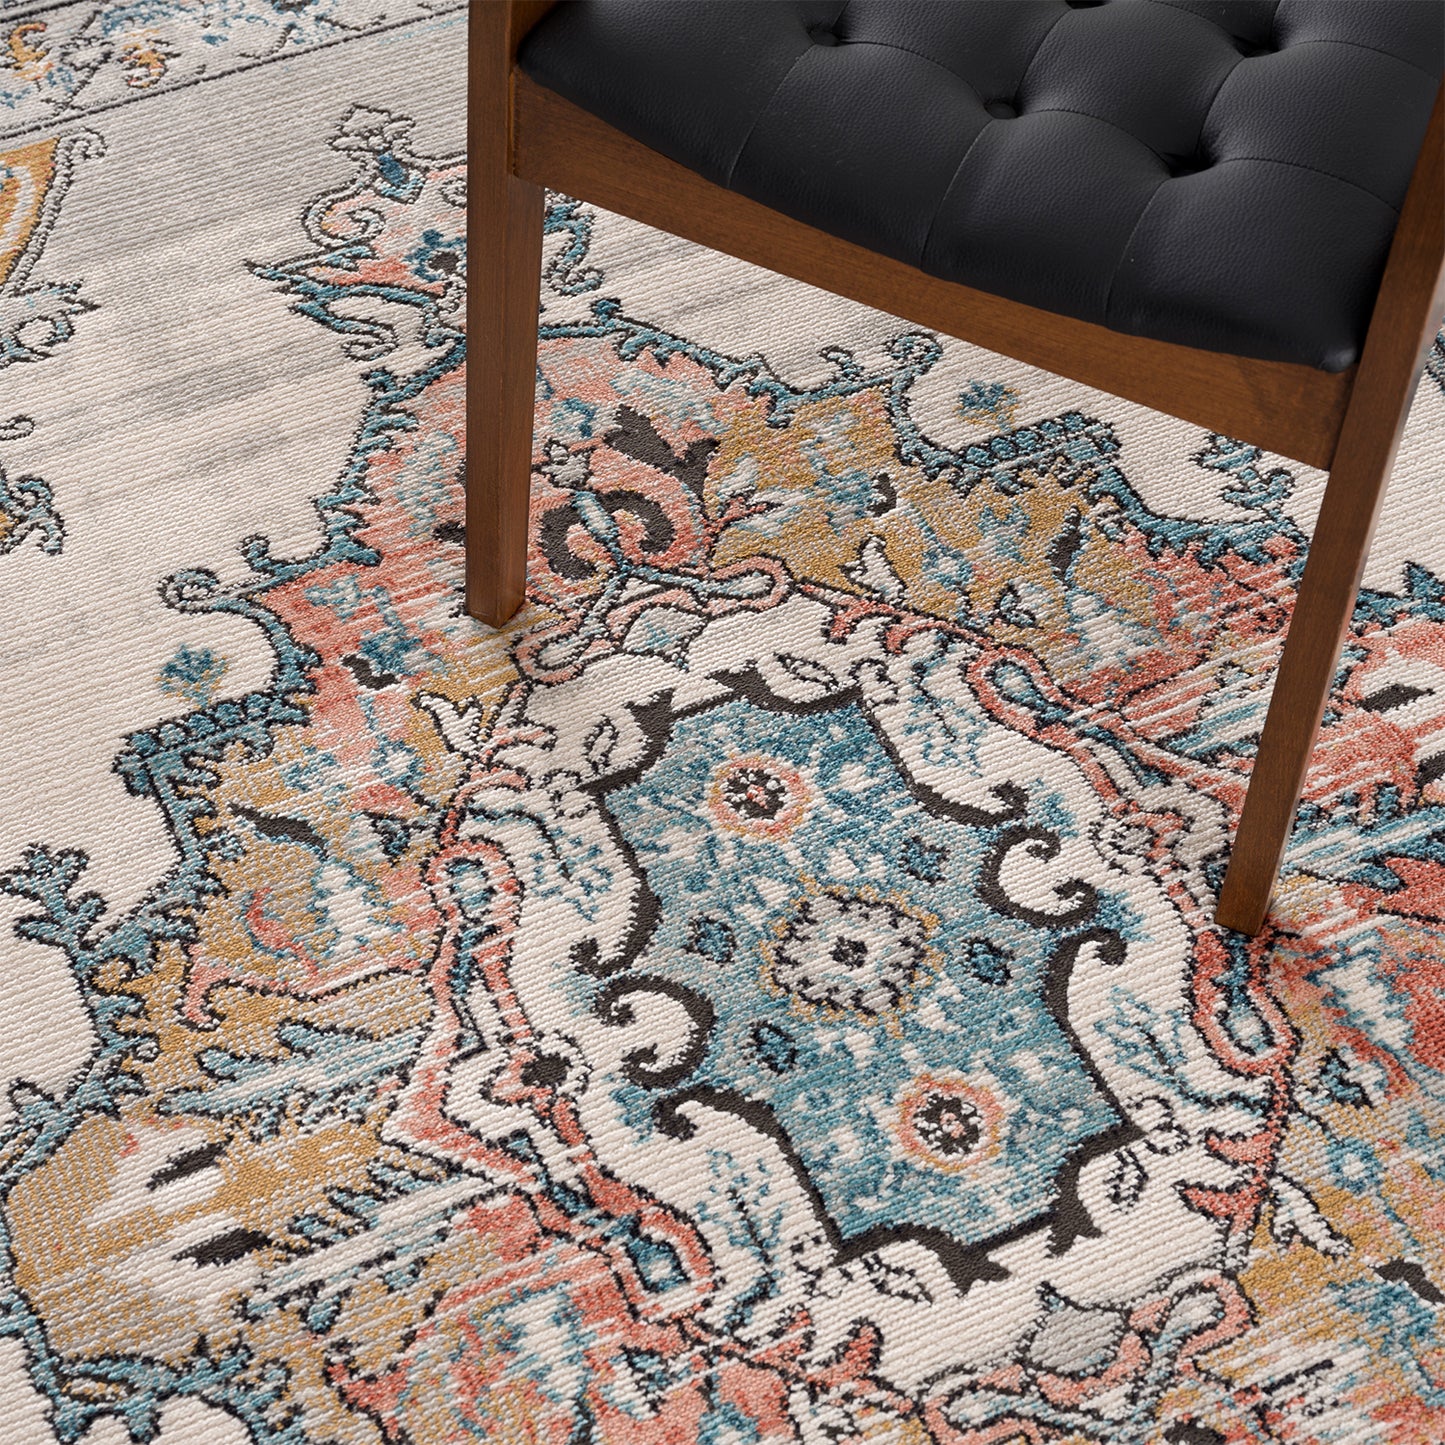 la dole rugs traditional persian bordered ikat turquoise ivory red orange area rug 9x12, 10x13 ft Large Big Carpet, Living Room, Beroom